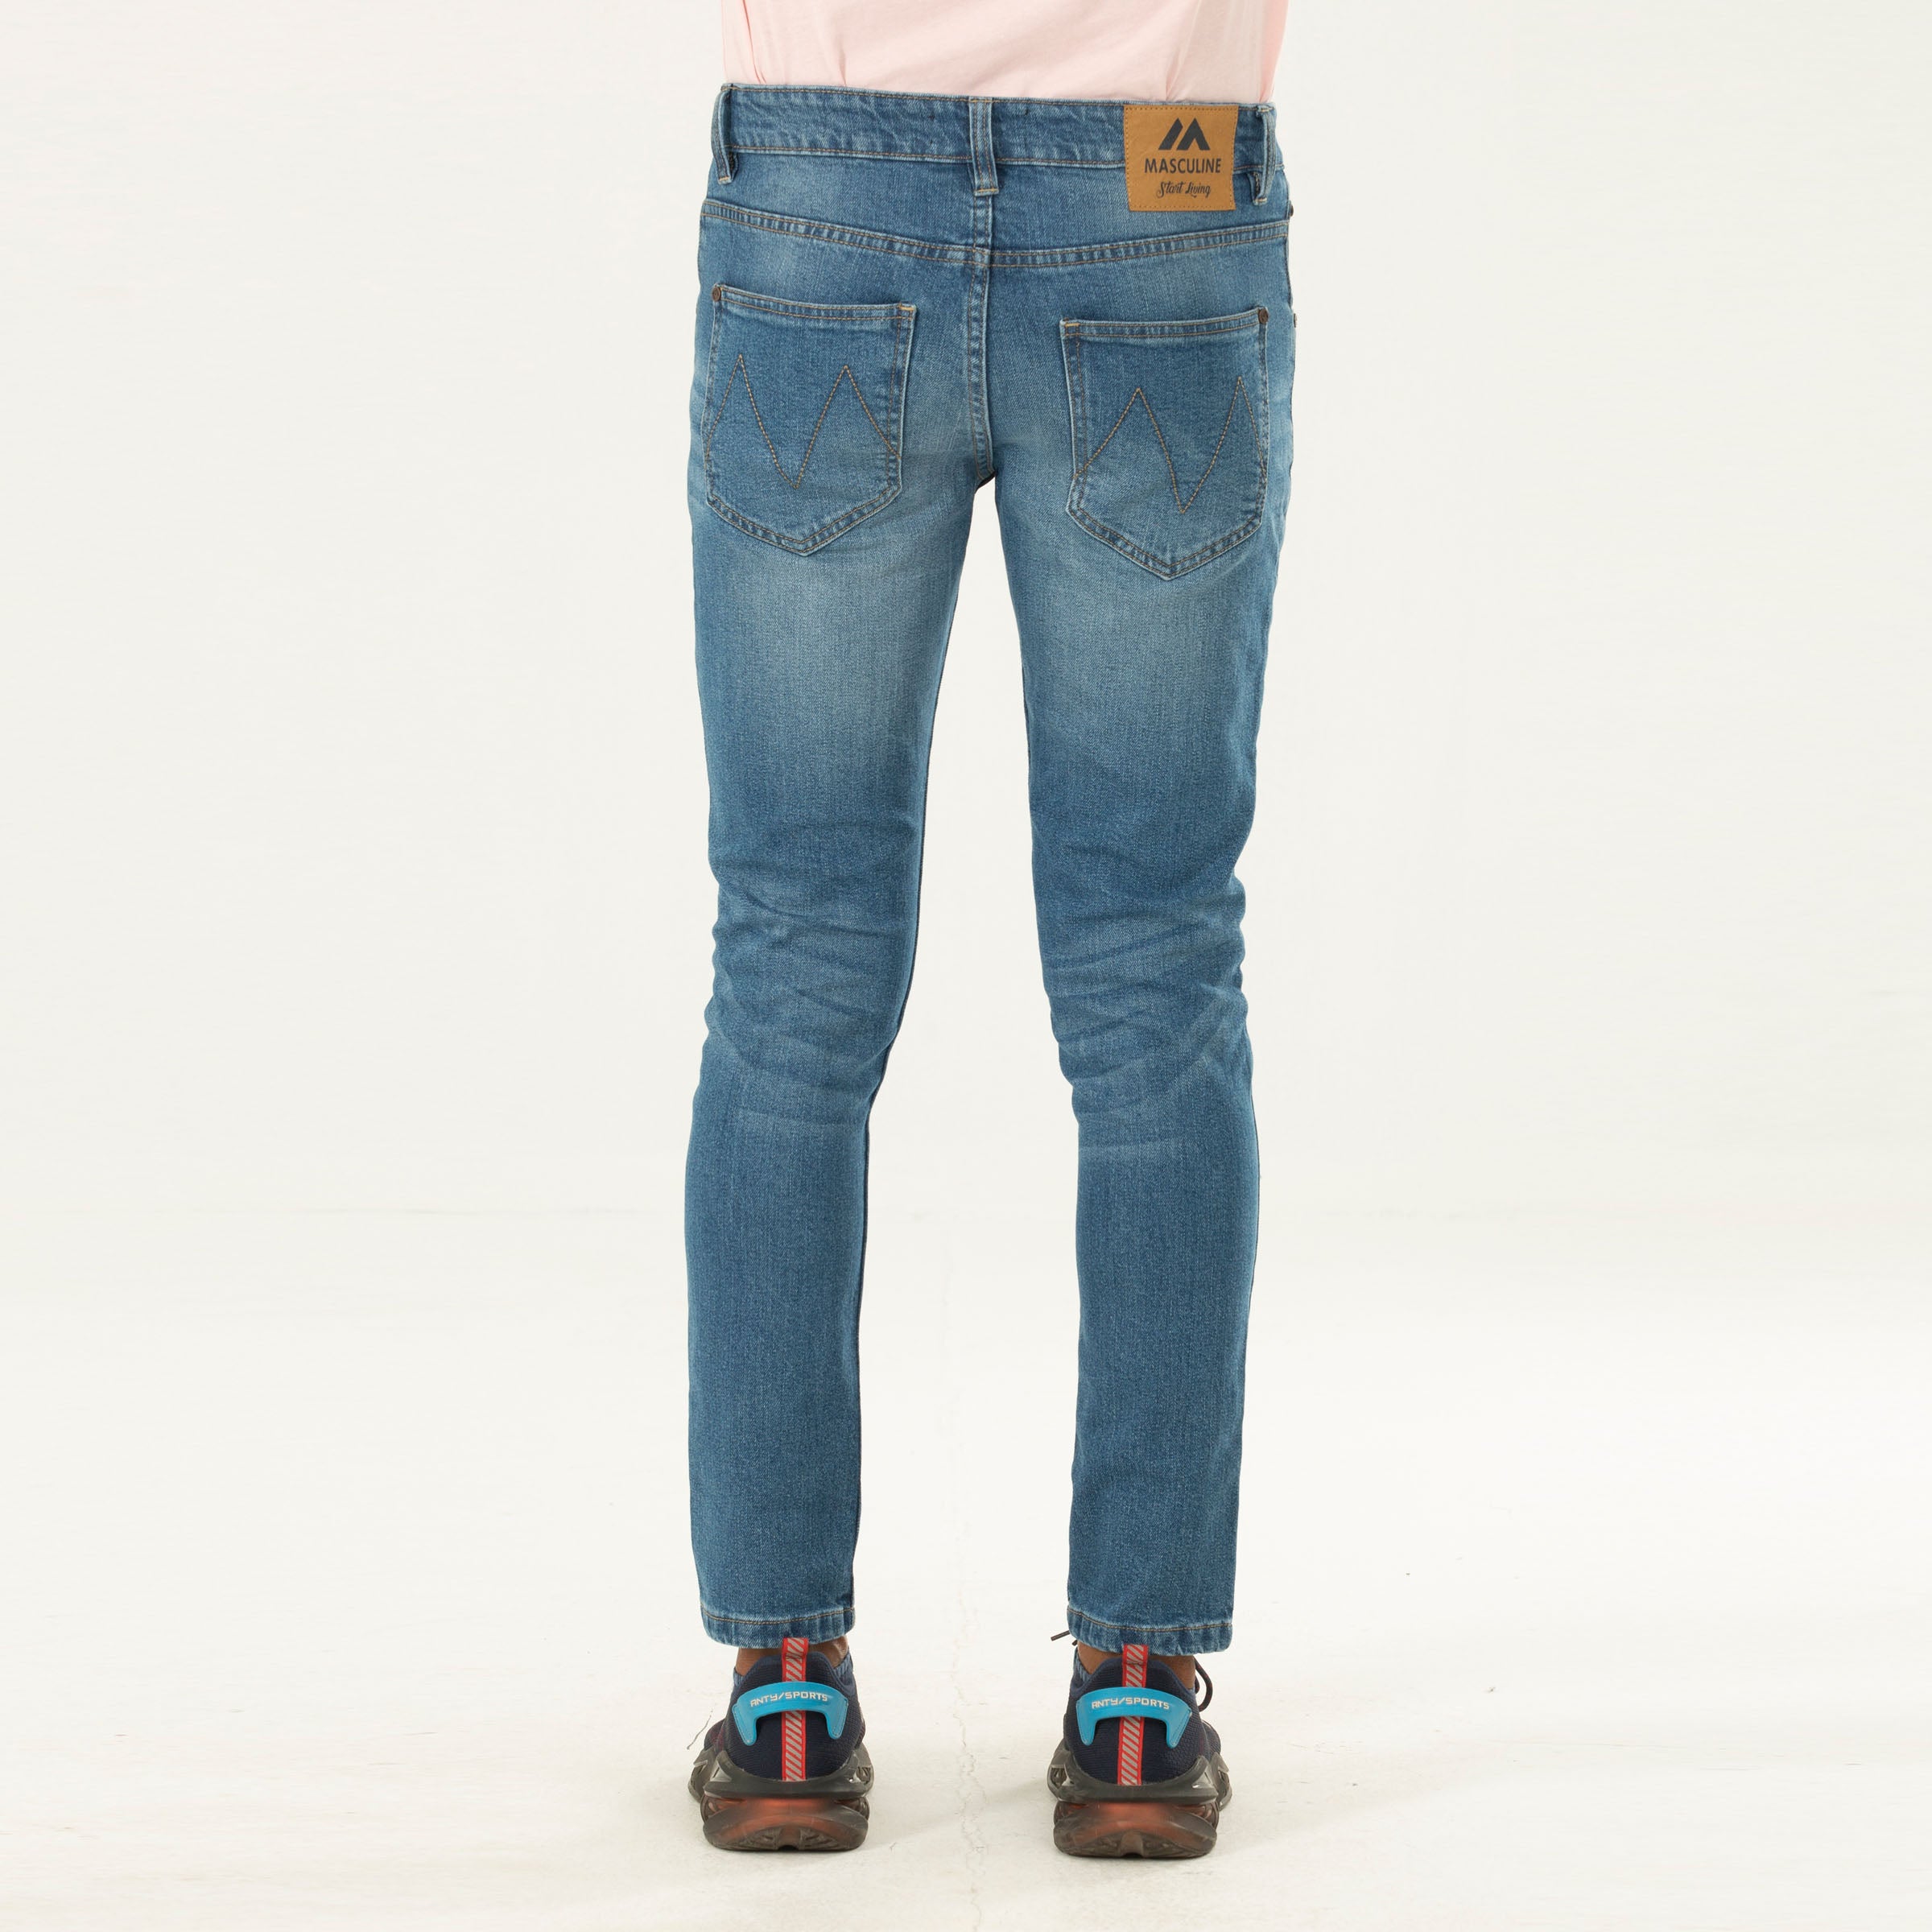 Stretchable Vintage Semi Fit Jeans Pant - Mid Blue